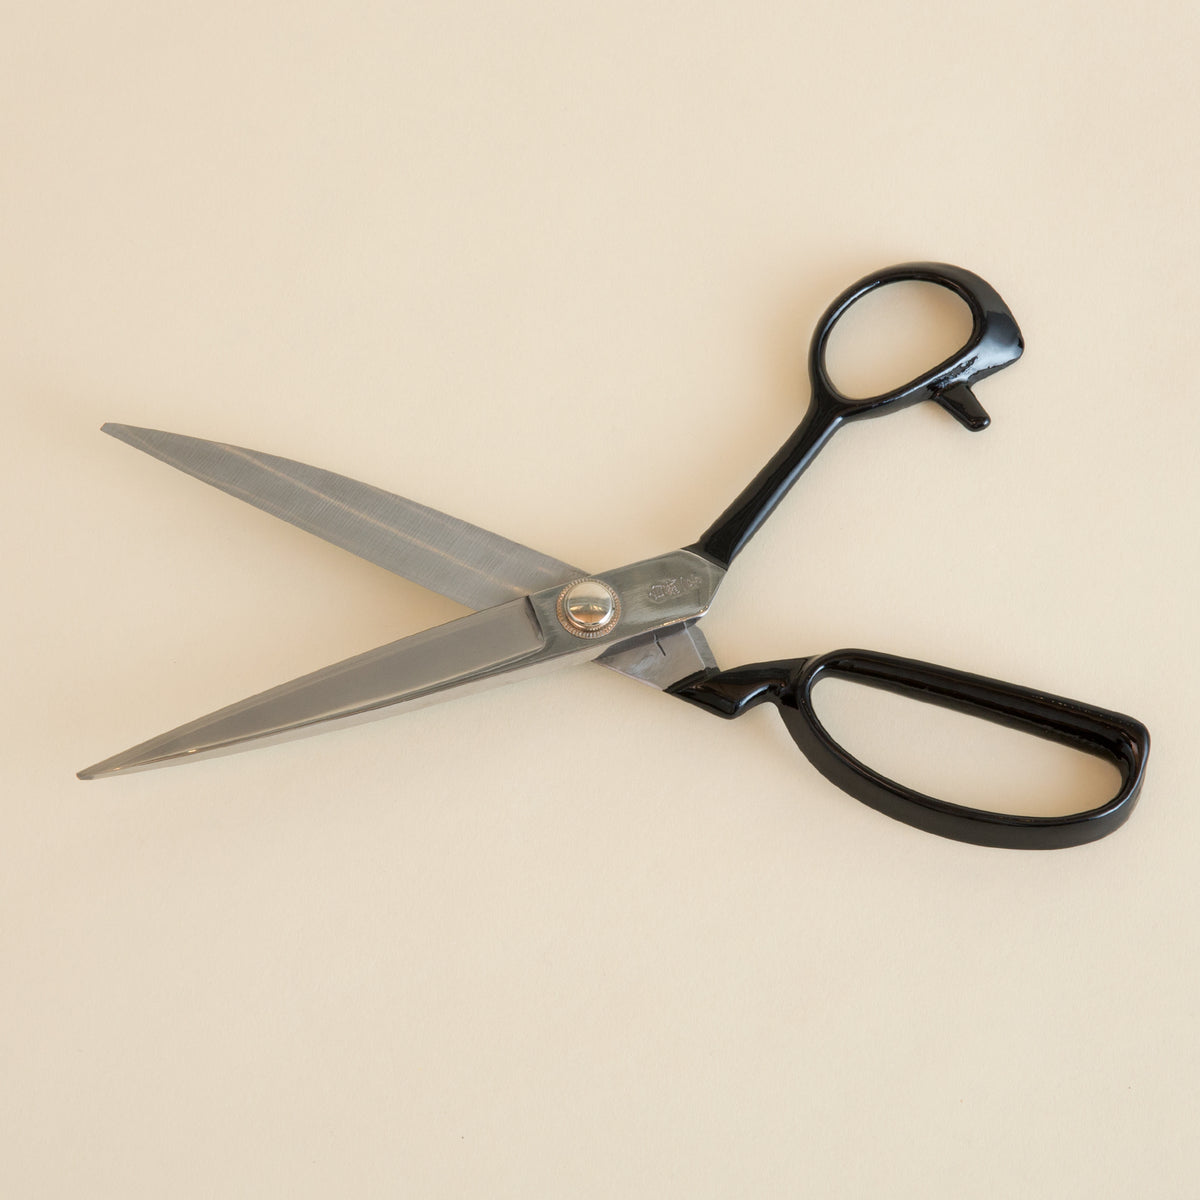 SIRO Steel Fabric Scissors